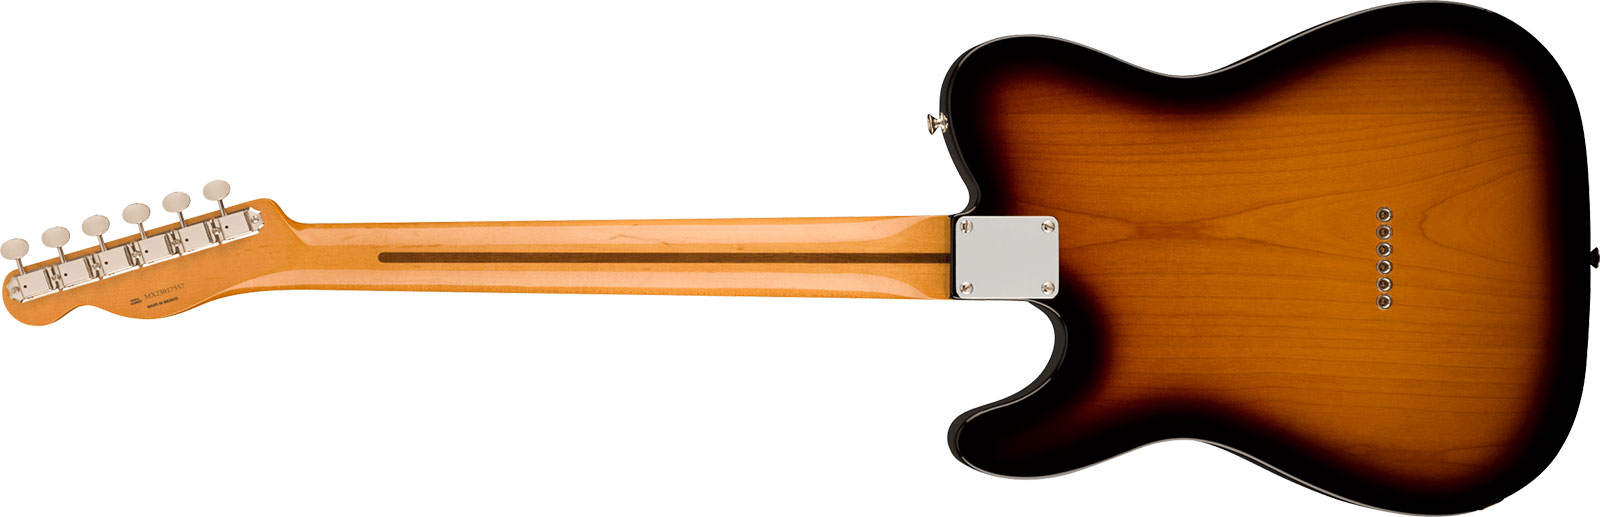 Fender Tele Nocaster 50s Vintera 2 Mex 2s Ht Mn - 2-color Sunburst - Guitarra eléctrica con forma de tel - Variation 1